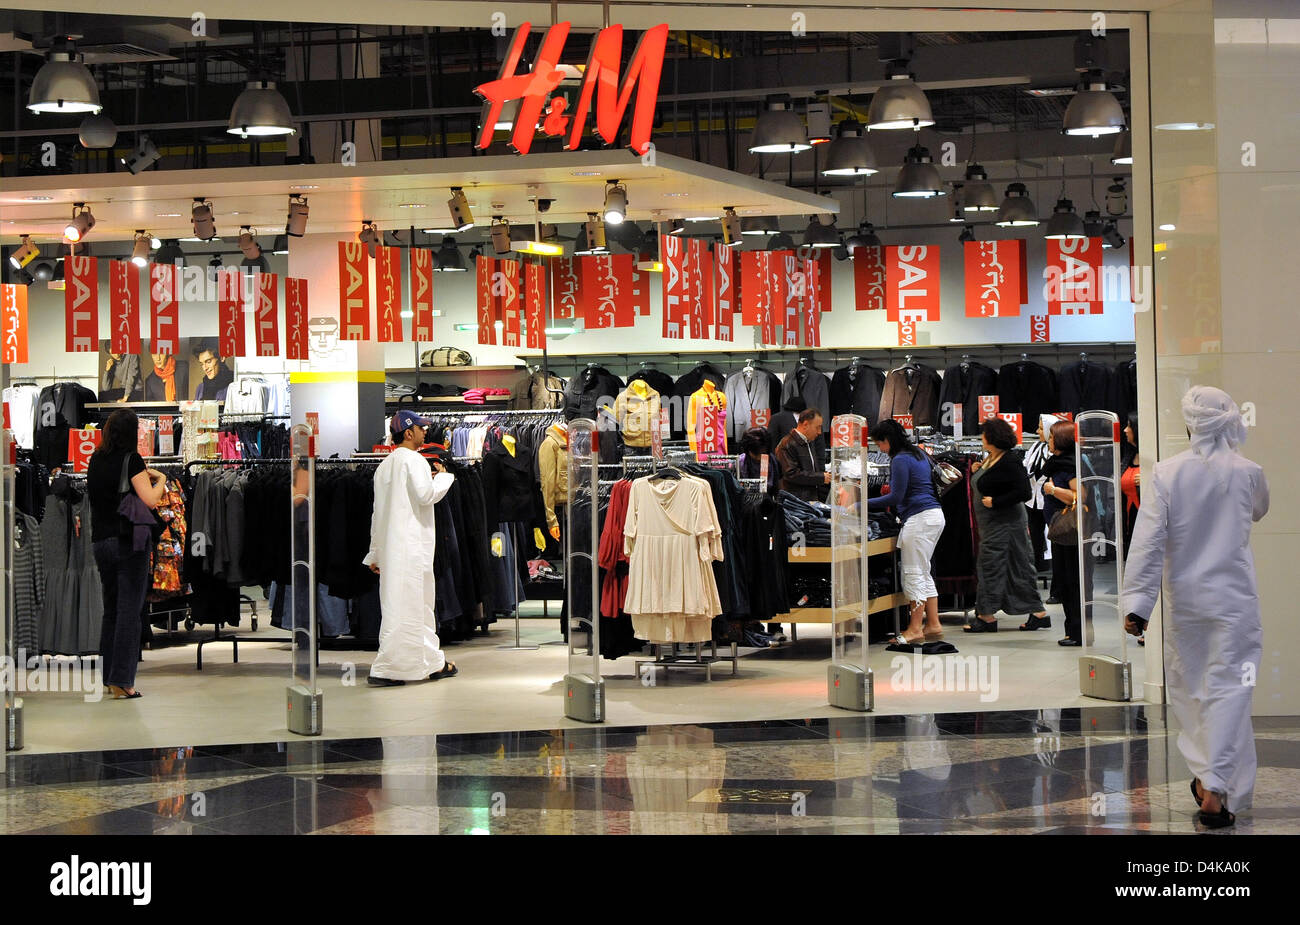 A H M Store Offers A Sale In A Mall In Dubai United Arab Emirates